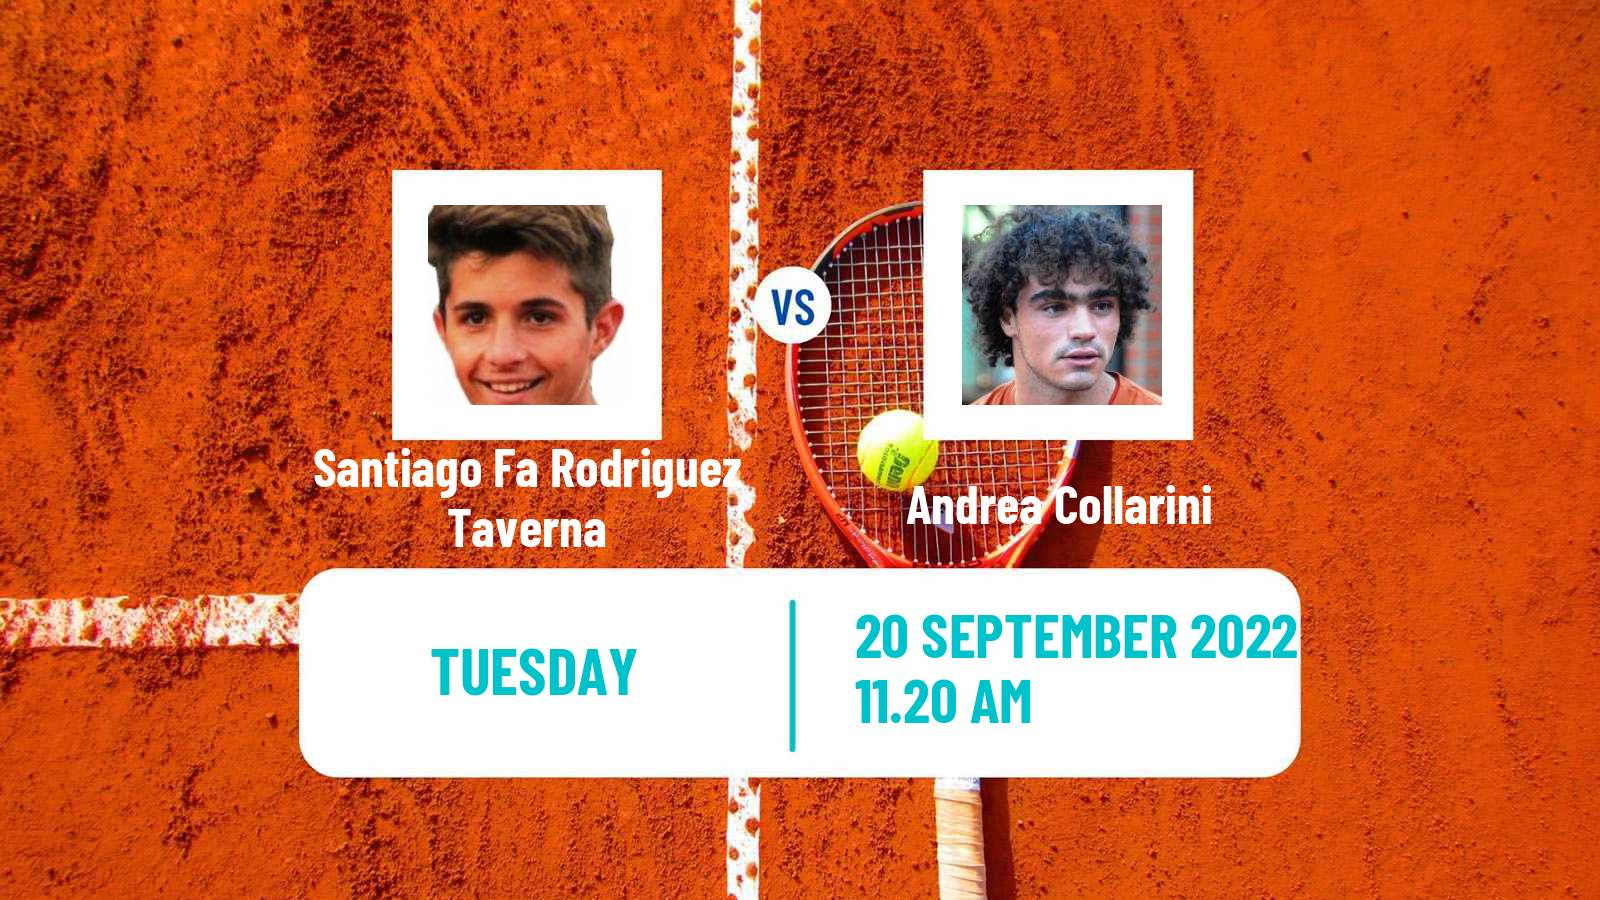 Tennis ATP Challenger Santiago Fa Rodriguez Taverna - Andrea Collarini